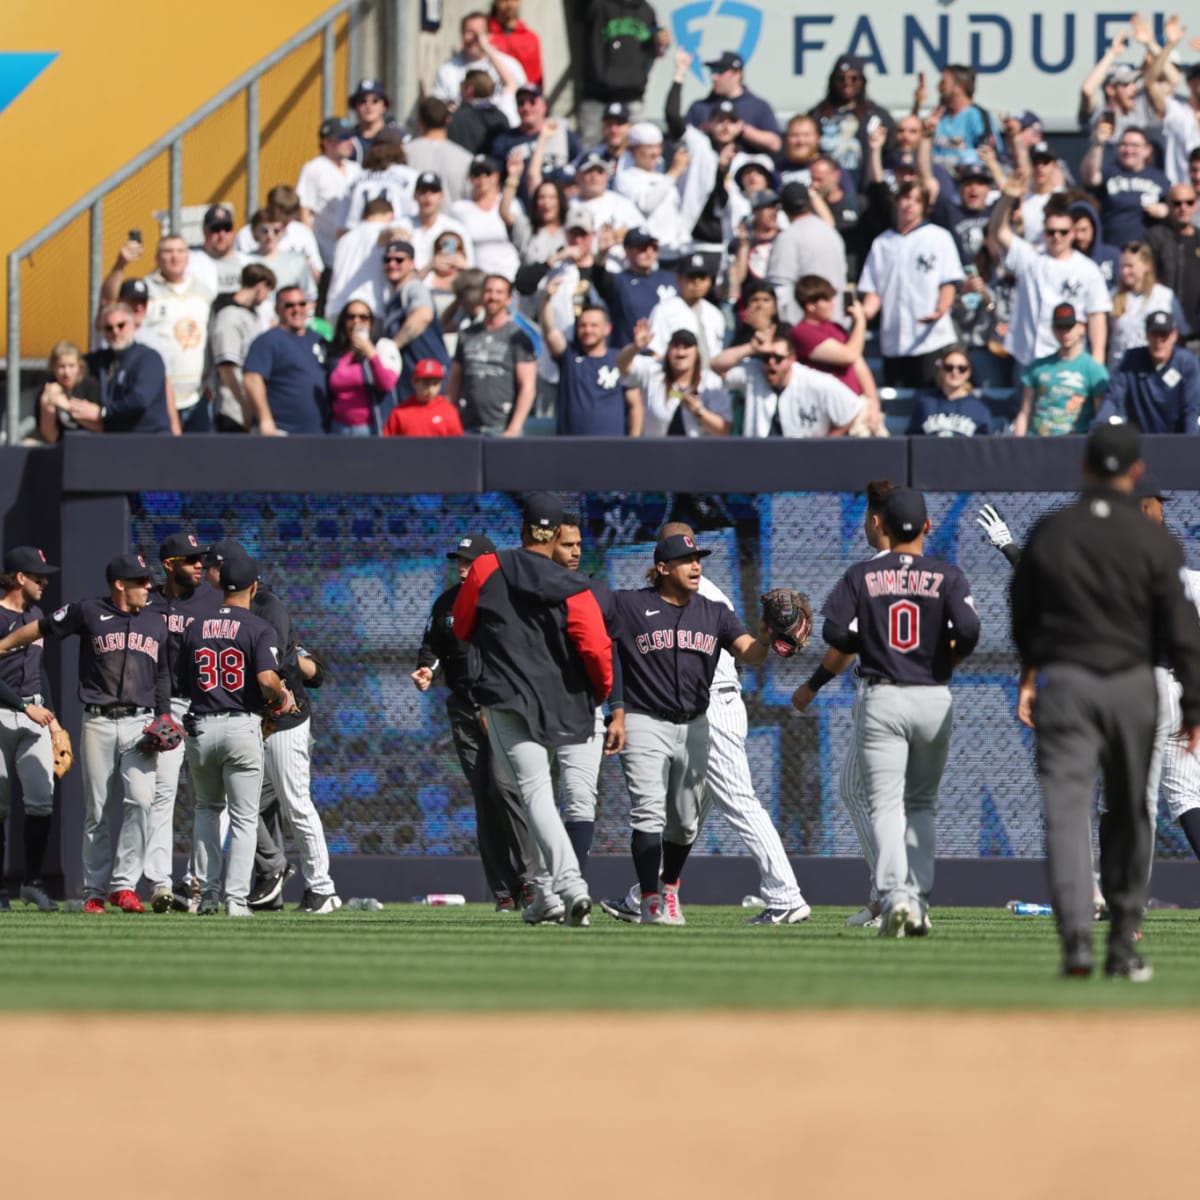 Yankees Stadium fans hurl trash at Guardians after walk-off win